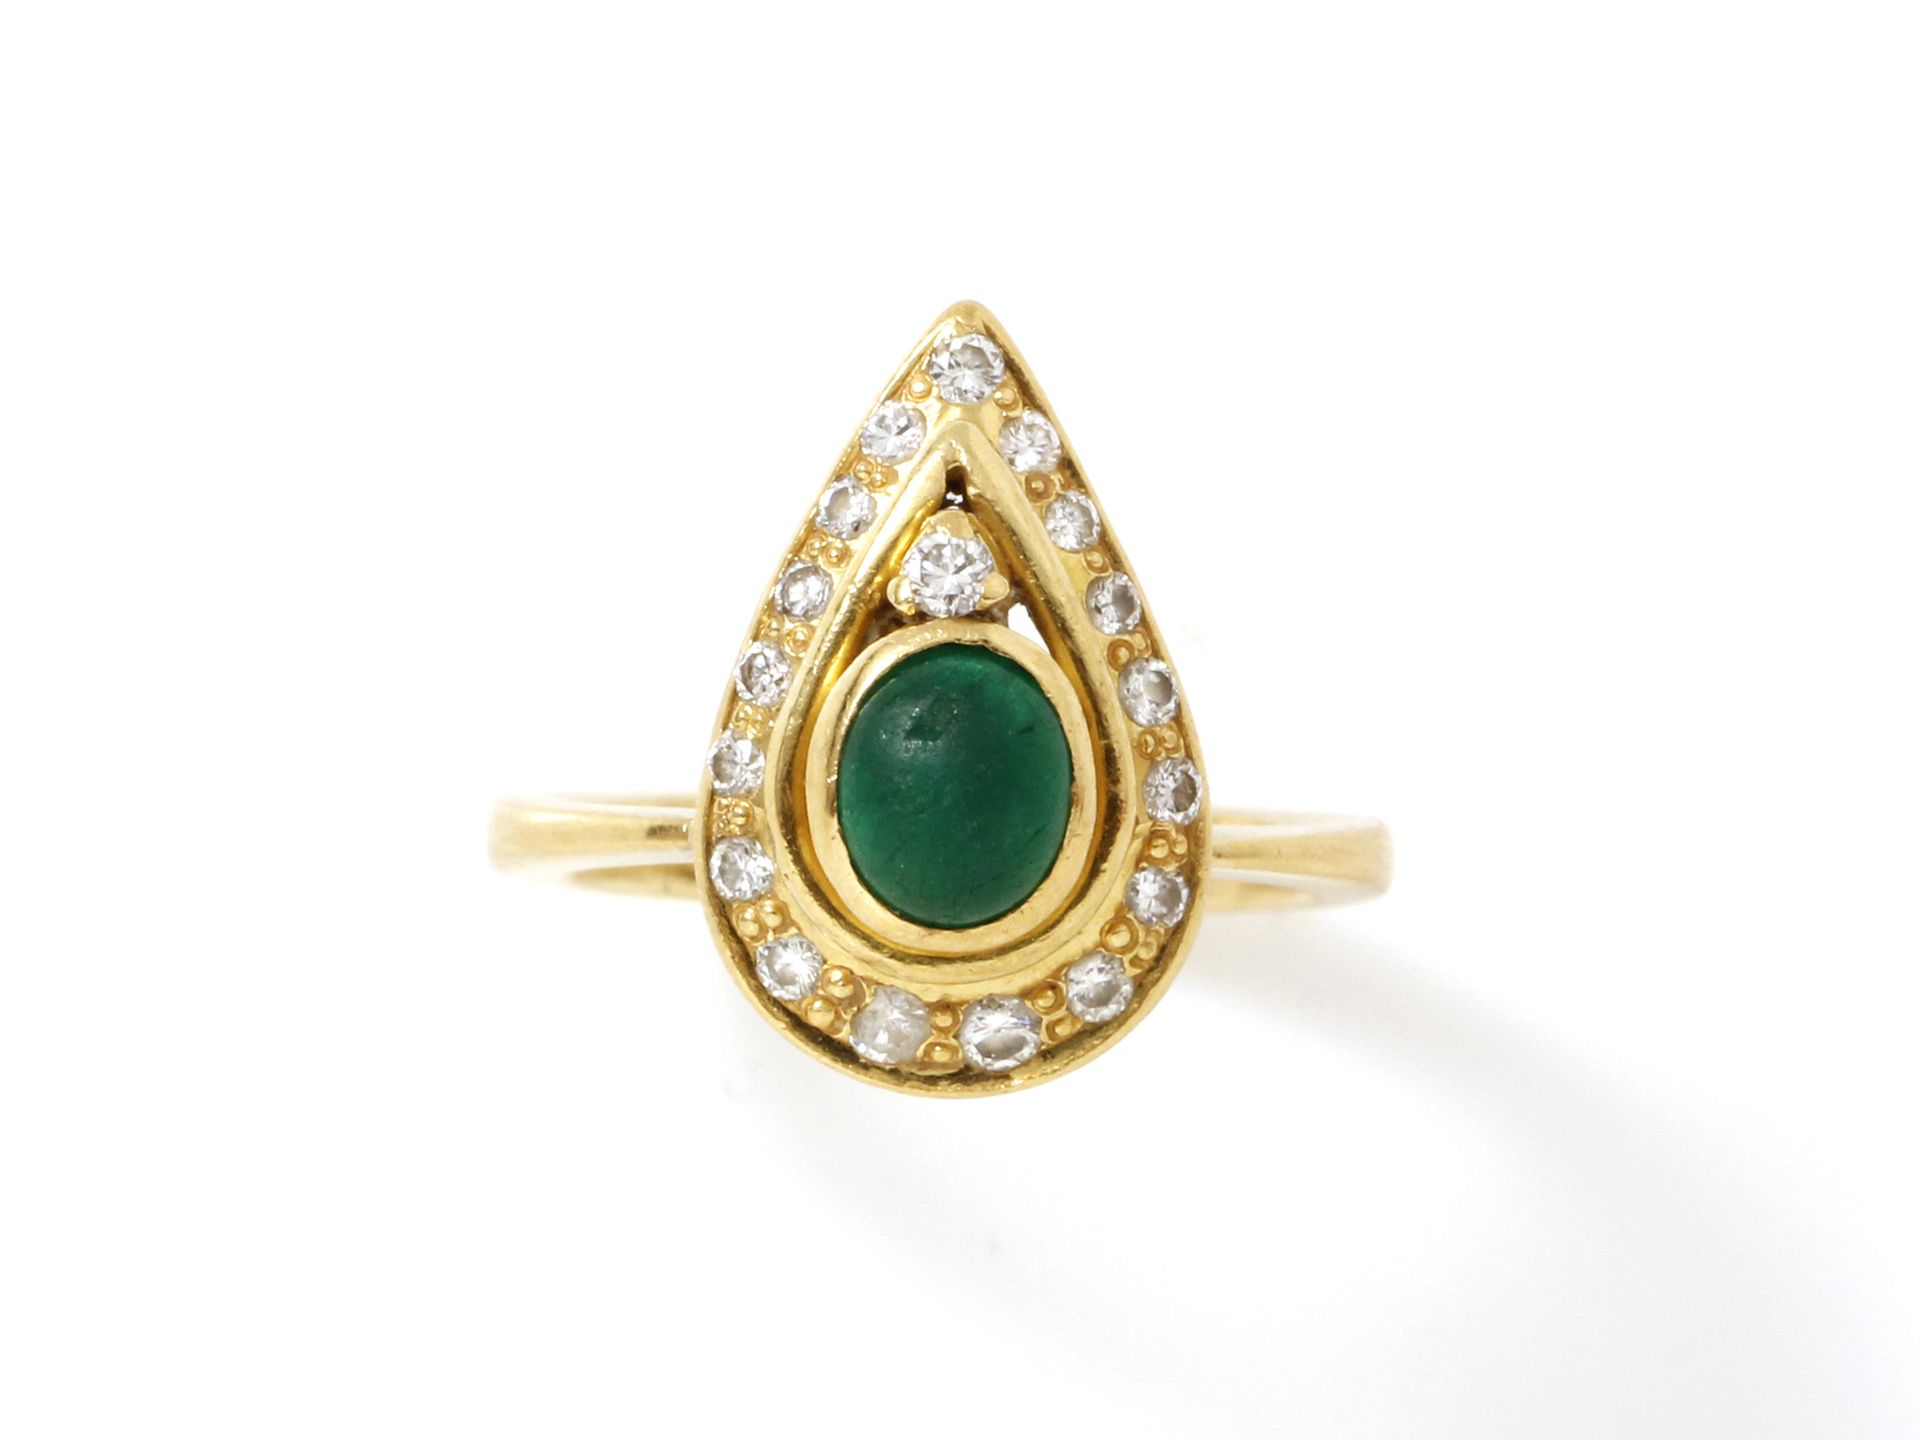 Null NV 7018 - 750千分之一黄金戒指，装饰有凸圆形祖母绿的封闭式镶嵌，周围有明亮式钻石。(绿宝石上的筹码)
毛重：5.60克。TDD: 53